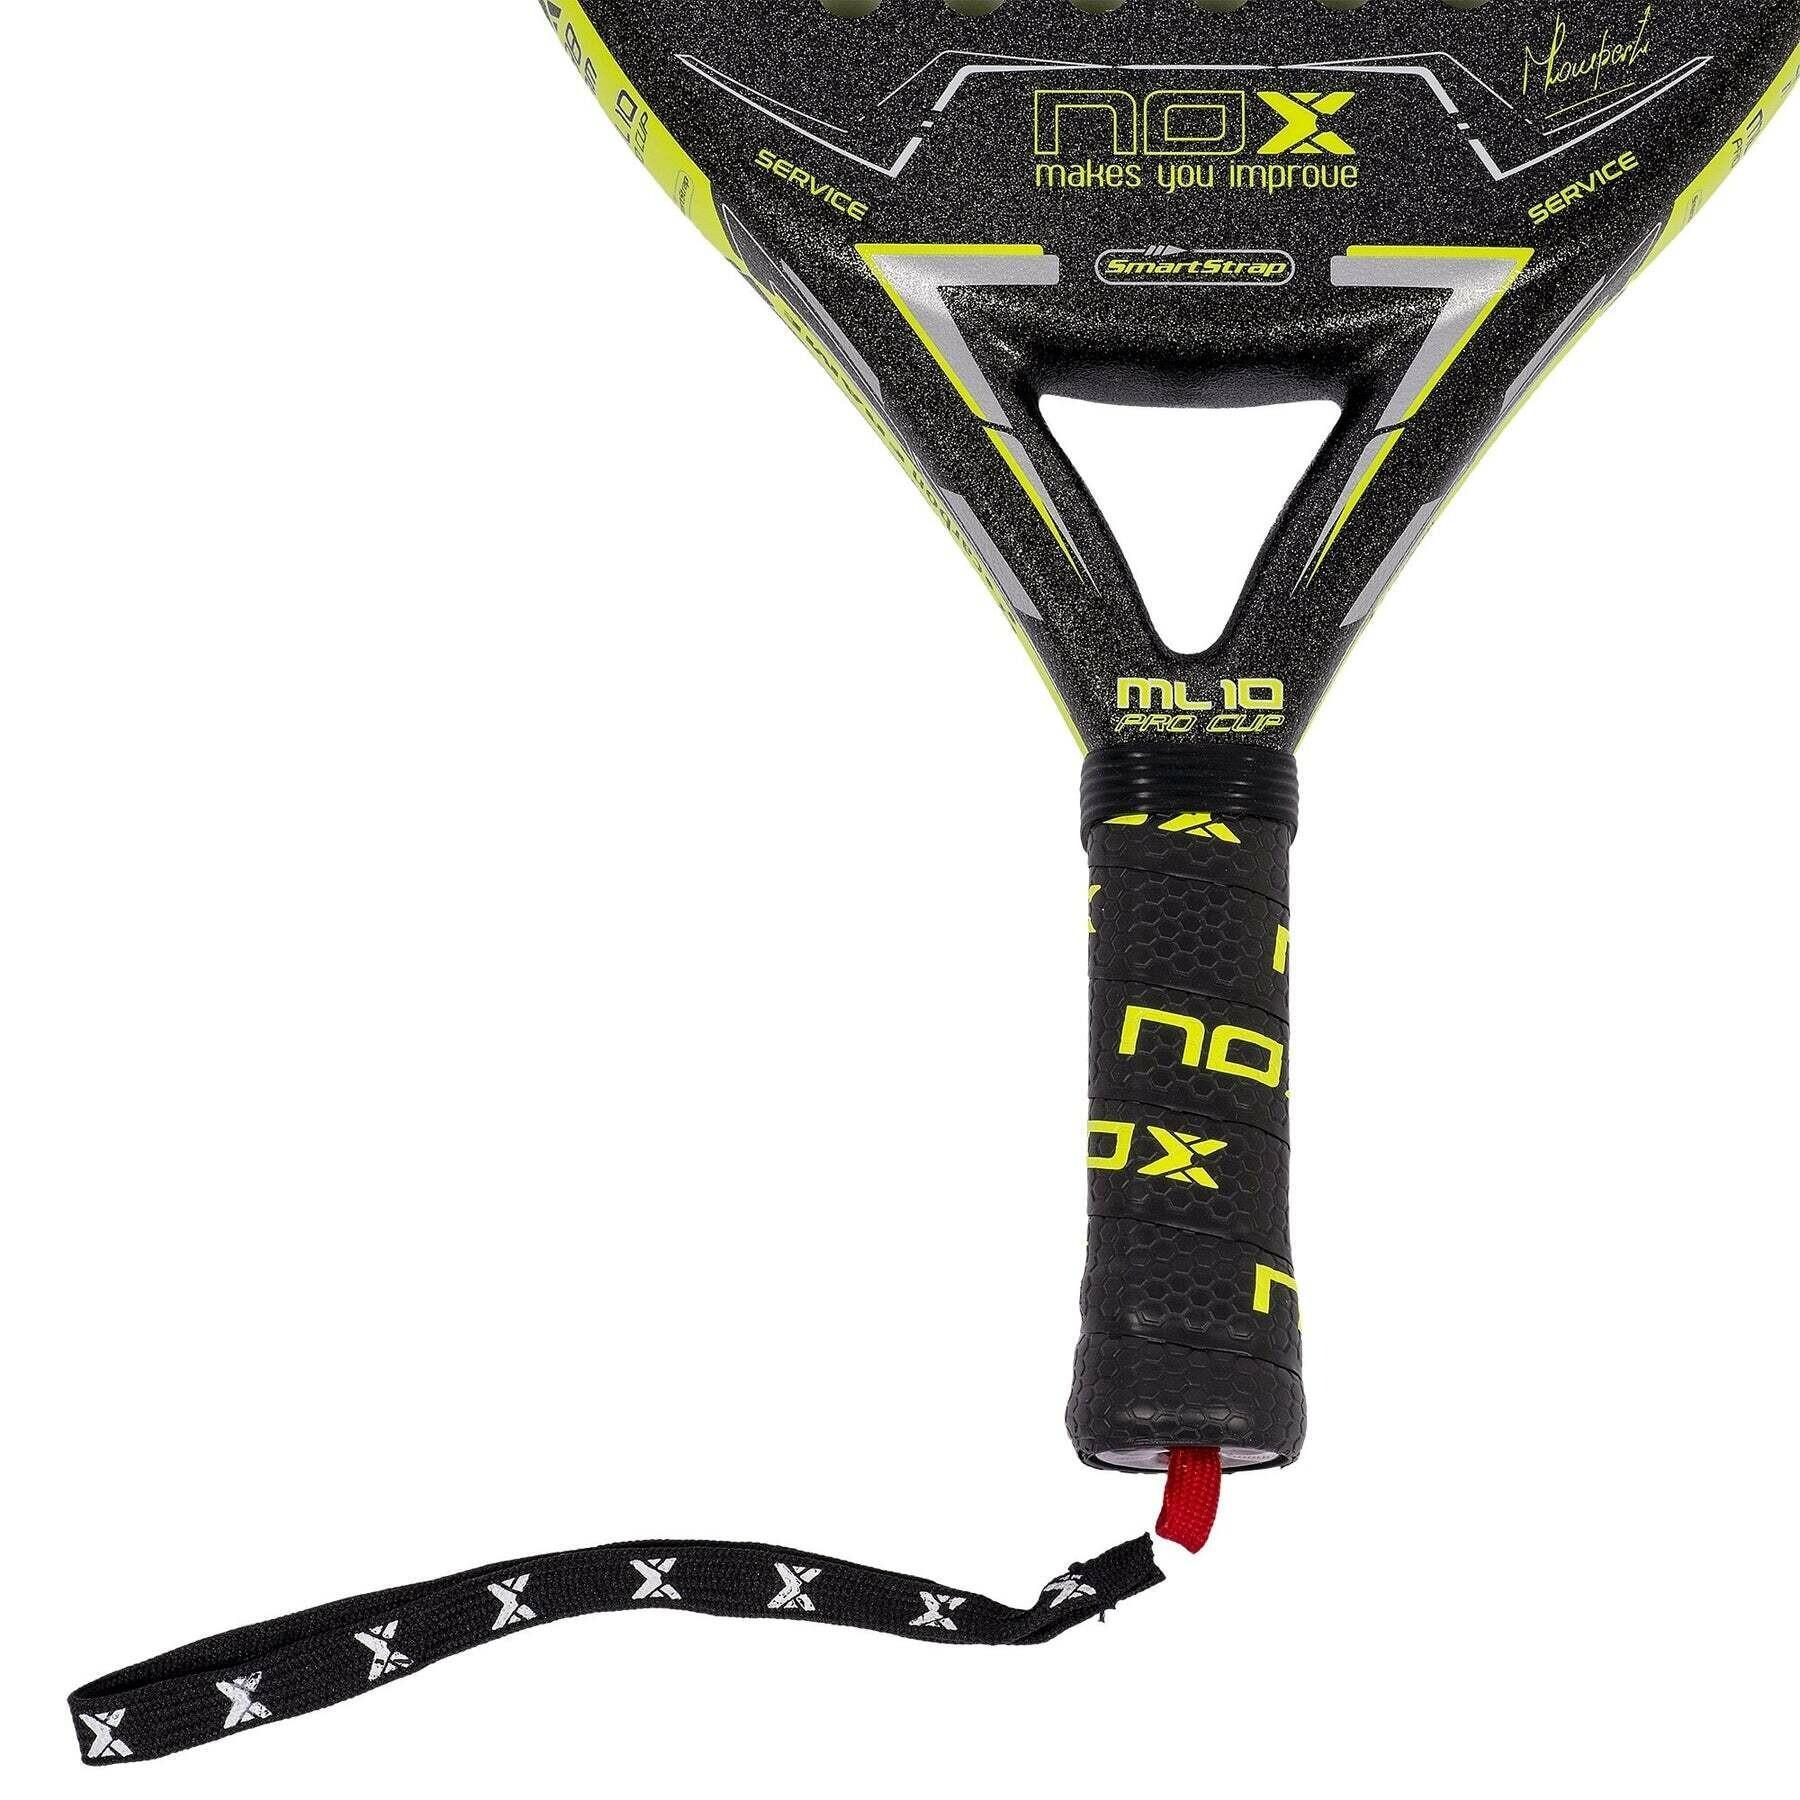 Racchetta da paddle tennis Nox Ml10 Pro Cup Rough Surface Edition